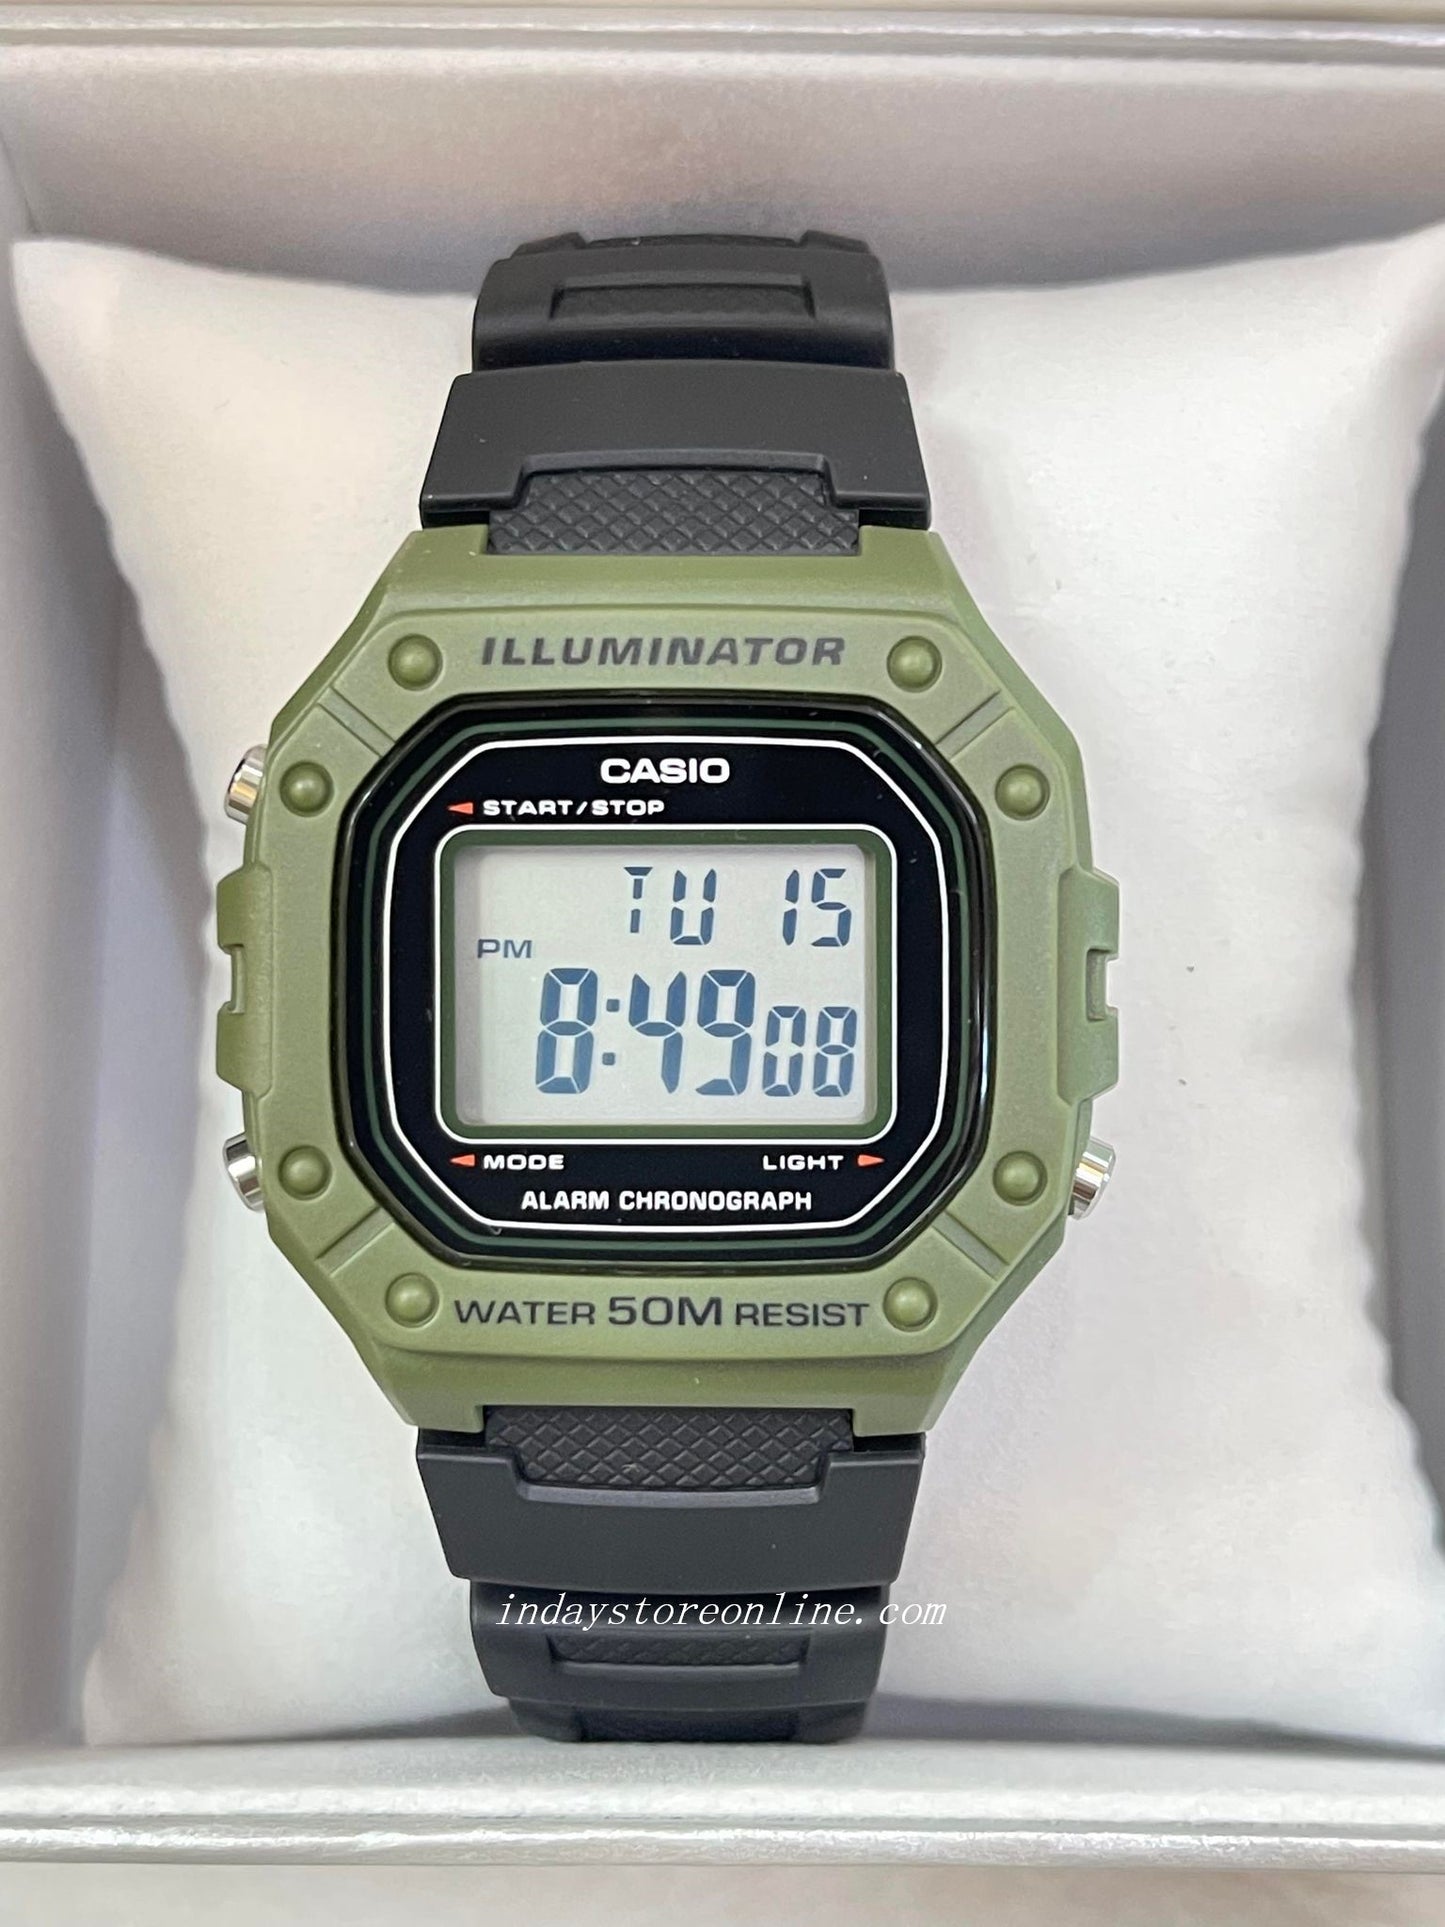 Casio Digital Men's Watch W-218H-3A Green/Black Color Sporty Design Resin Strap